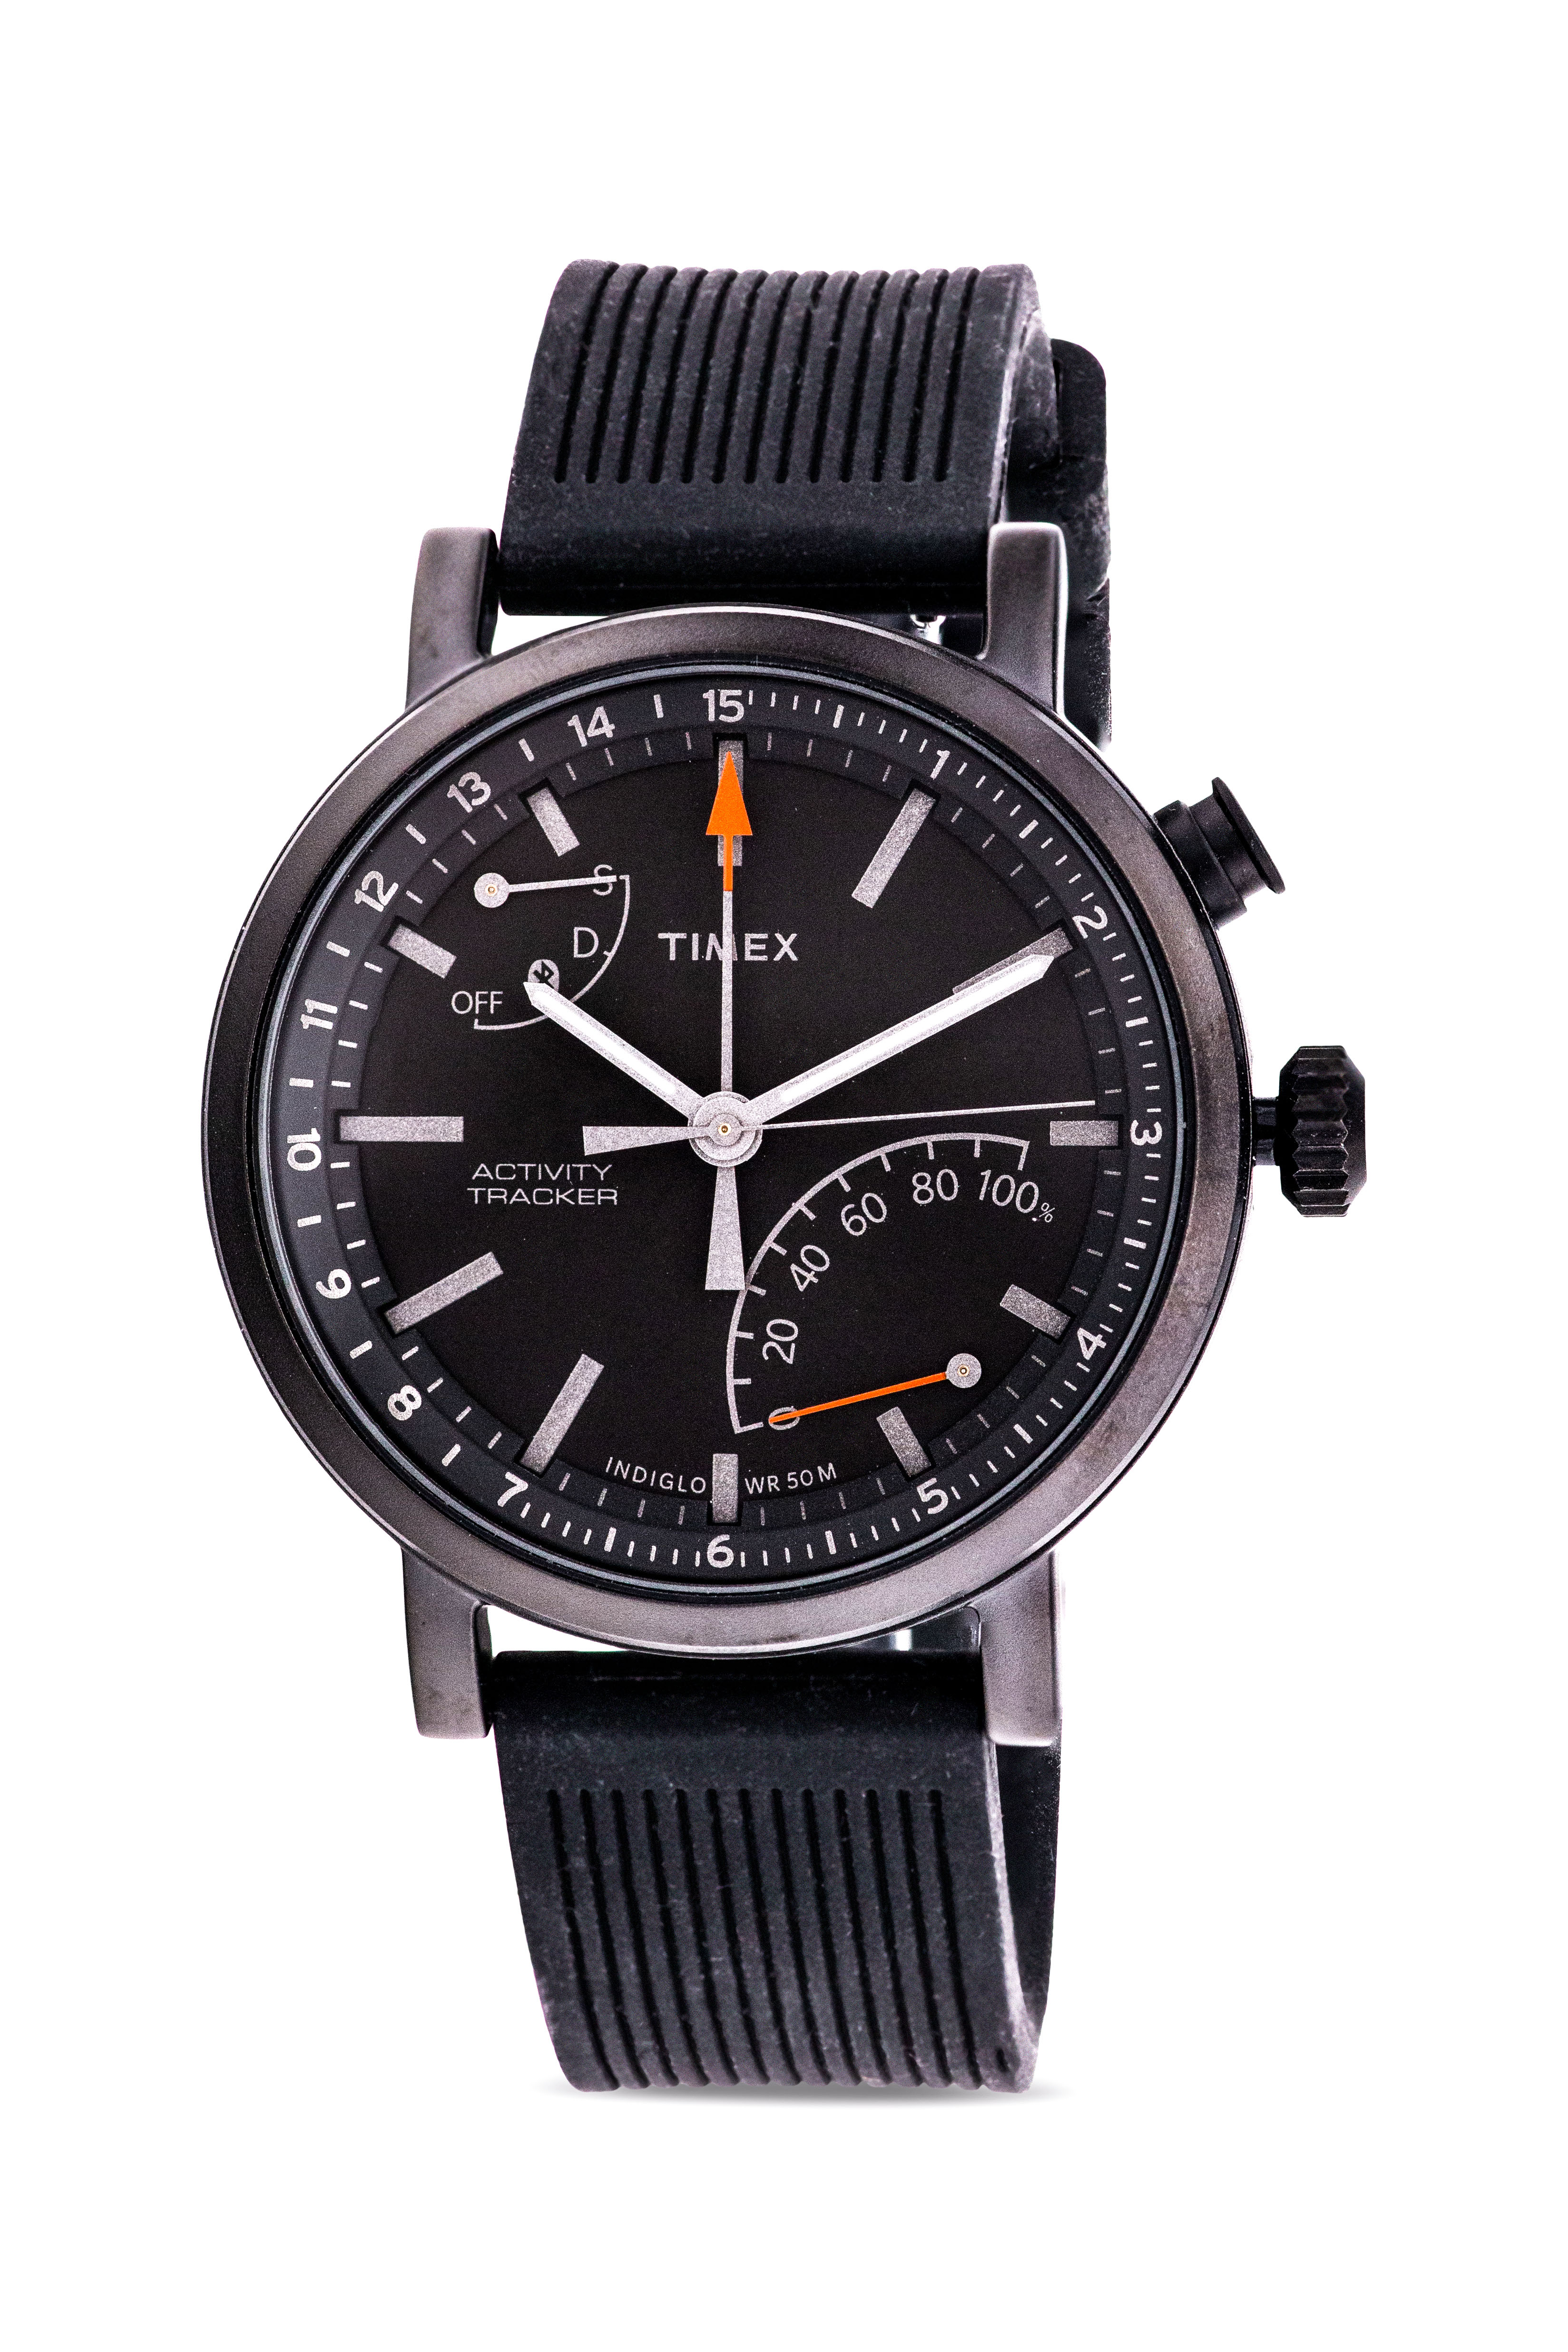 Timex Metropolitan+ Activity Tracker Rubber Mens Smart Watch TW2P82300